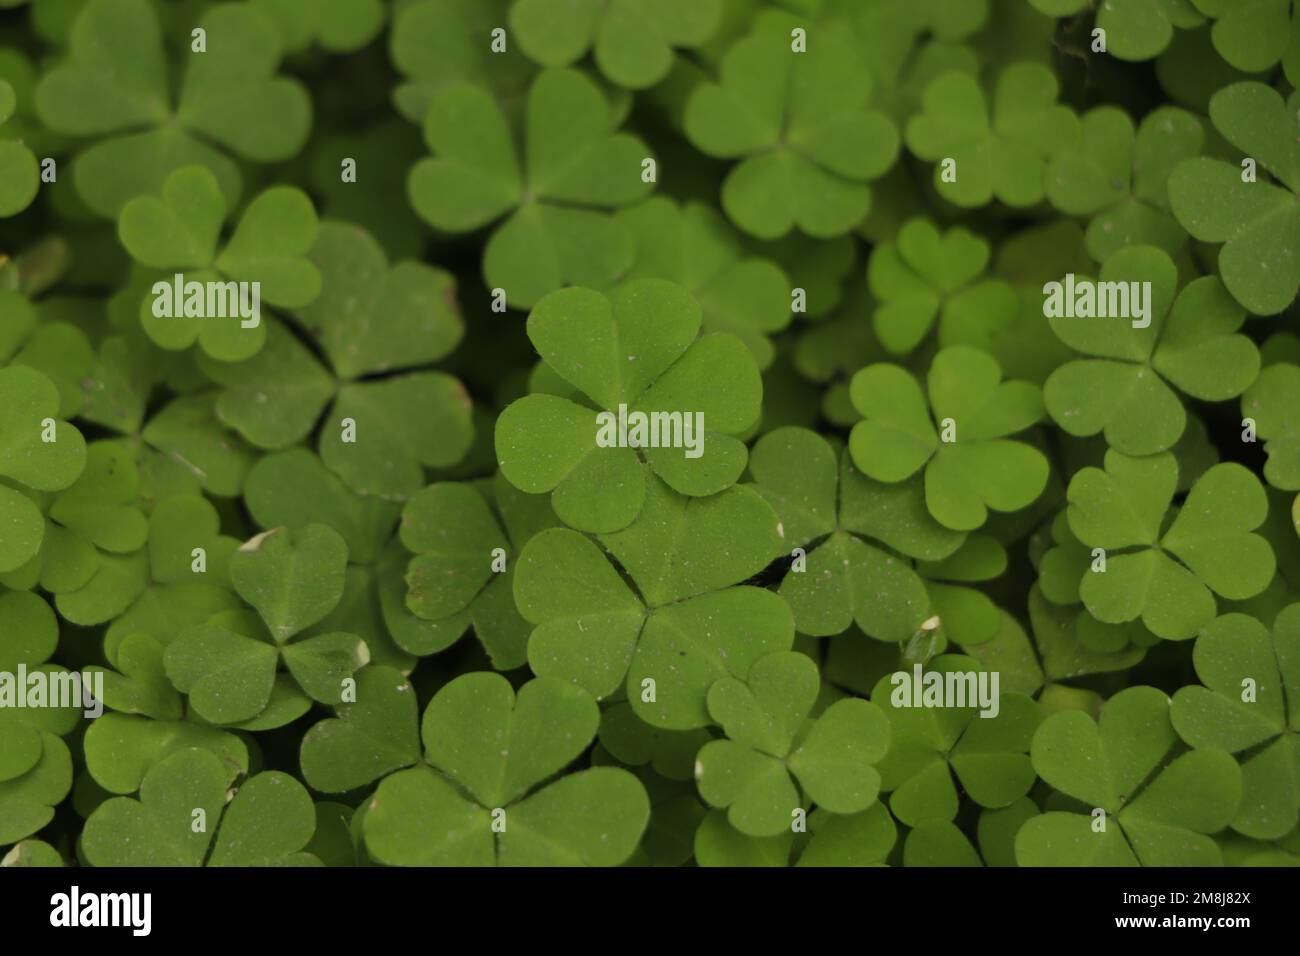 Green background with three-leaved shamrocks. St. Patrick's day holiday symbol. Stock Photo